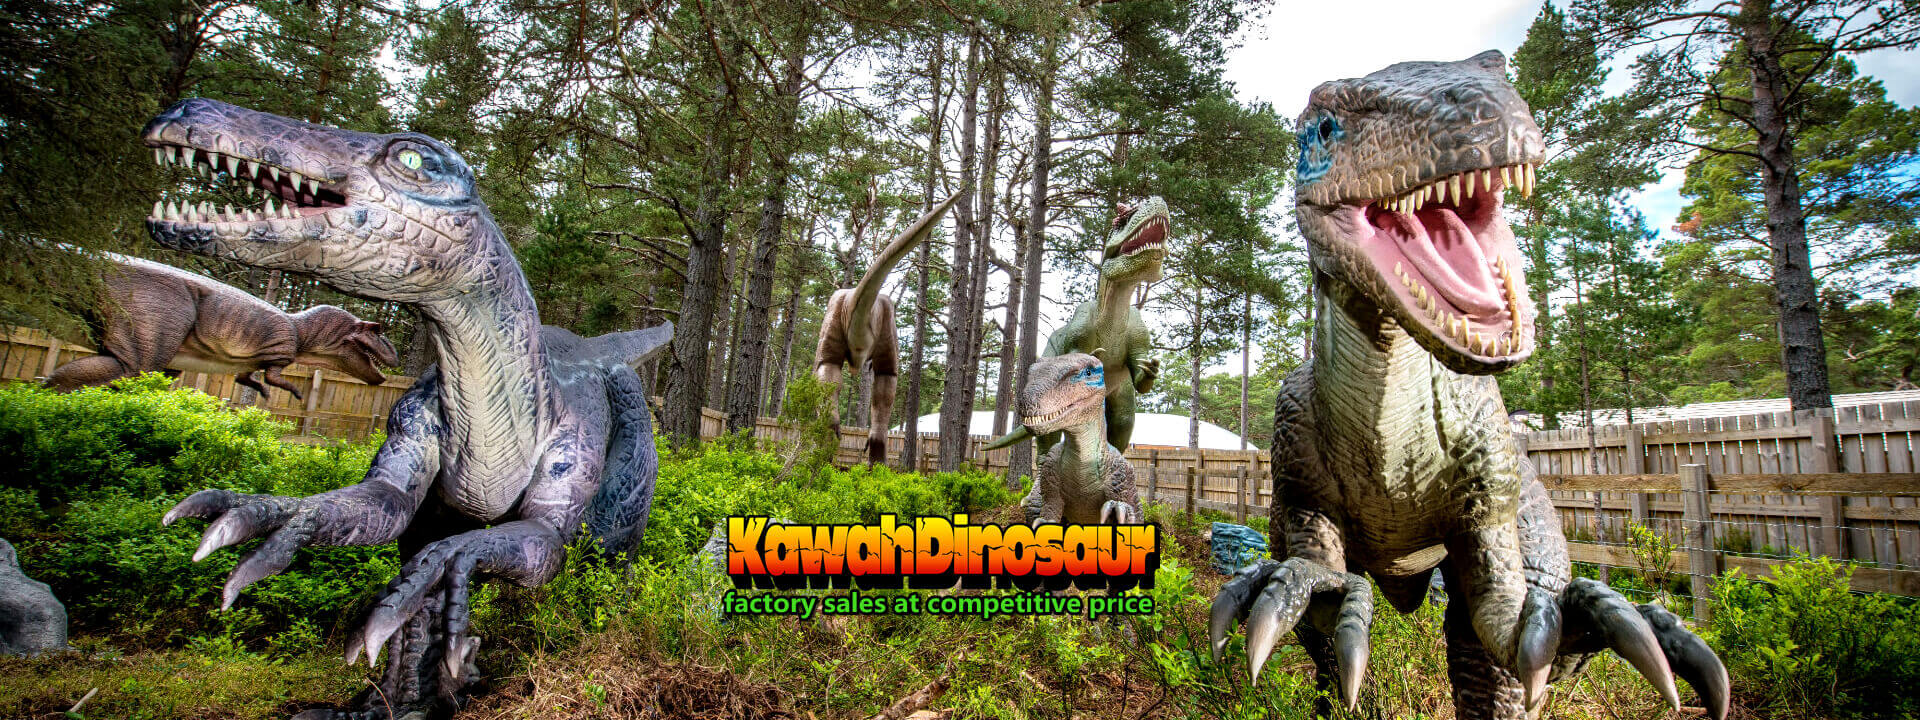 kawah dinosaurie-slide banner 1